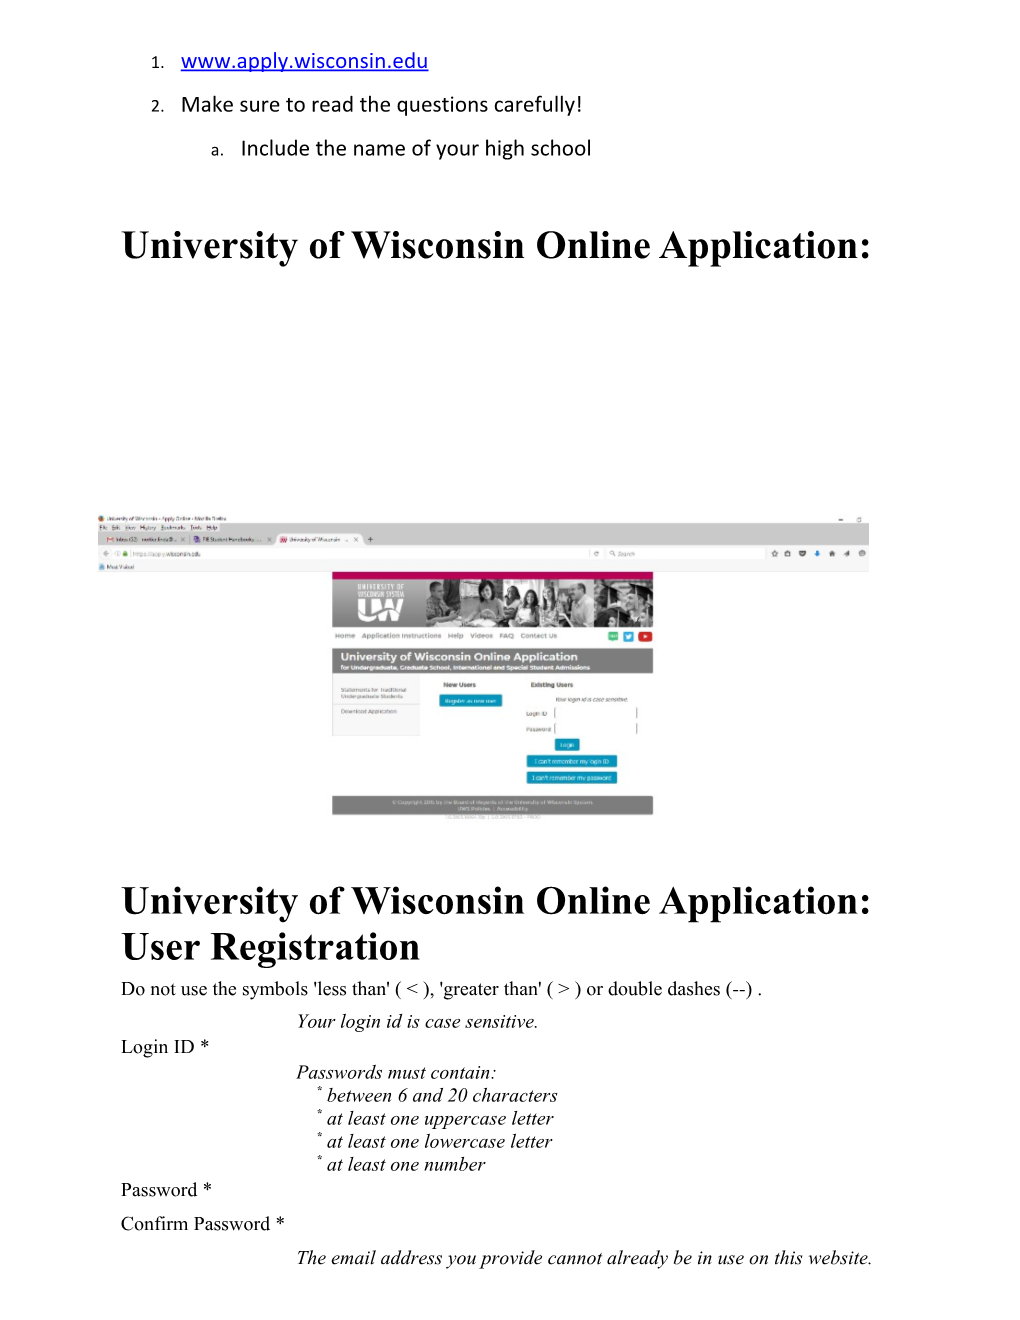 University of Wisconsin Online Application